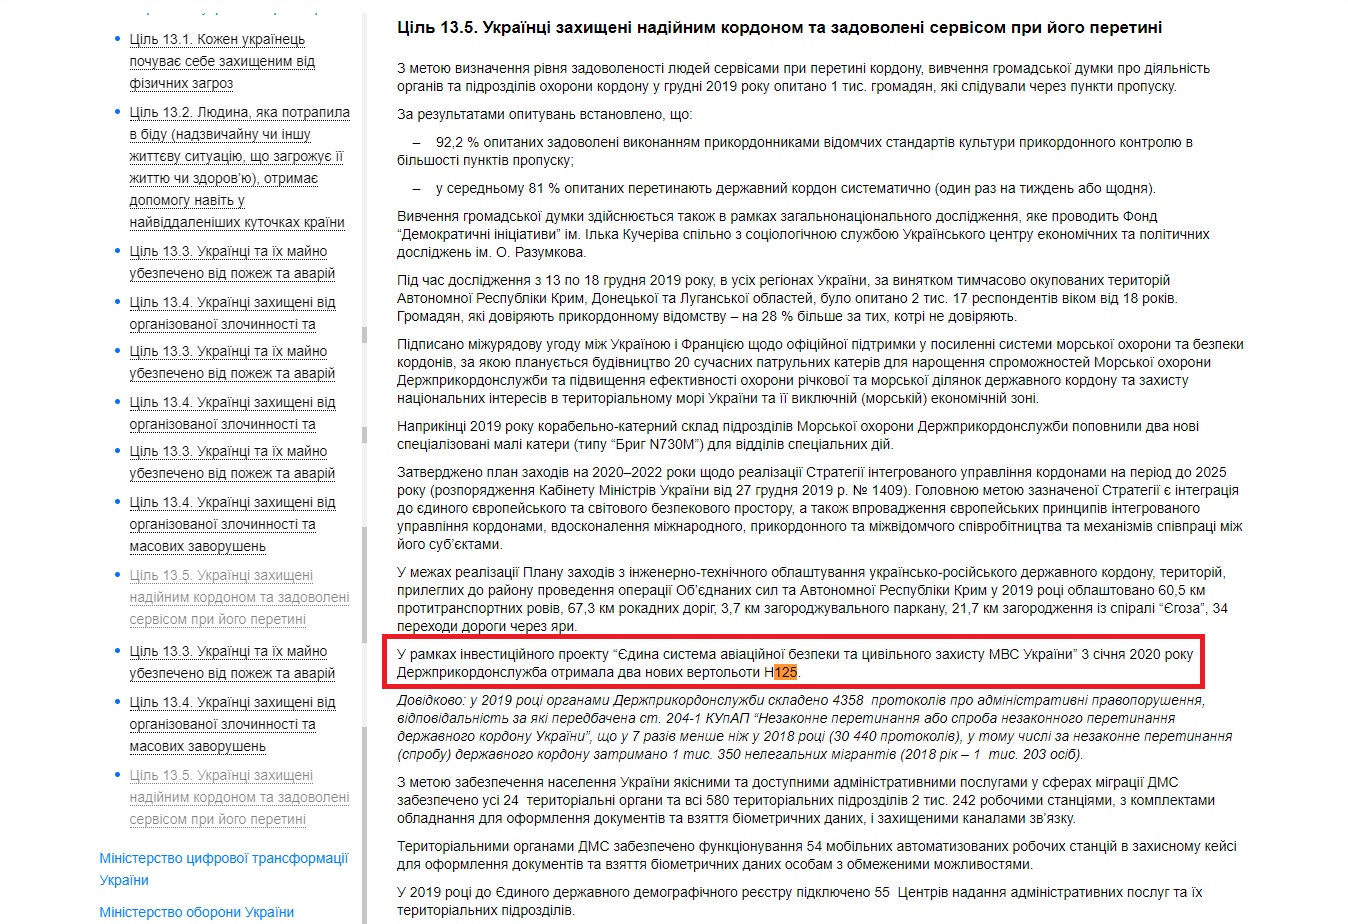 https://program.kmu.gov.ua/report/program-execution/2019#ministerstvo-oboroni-ukraini